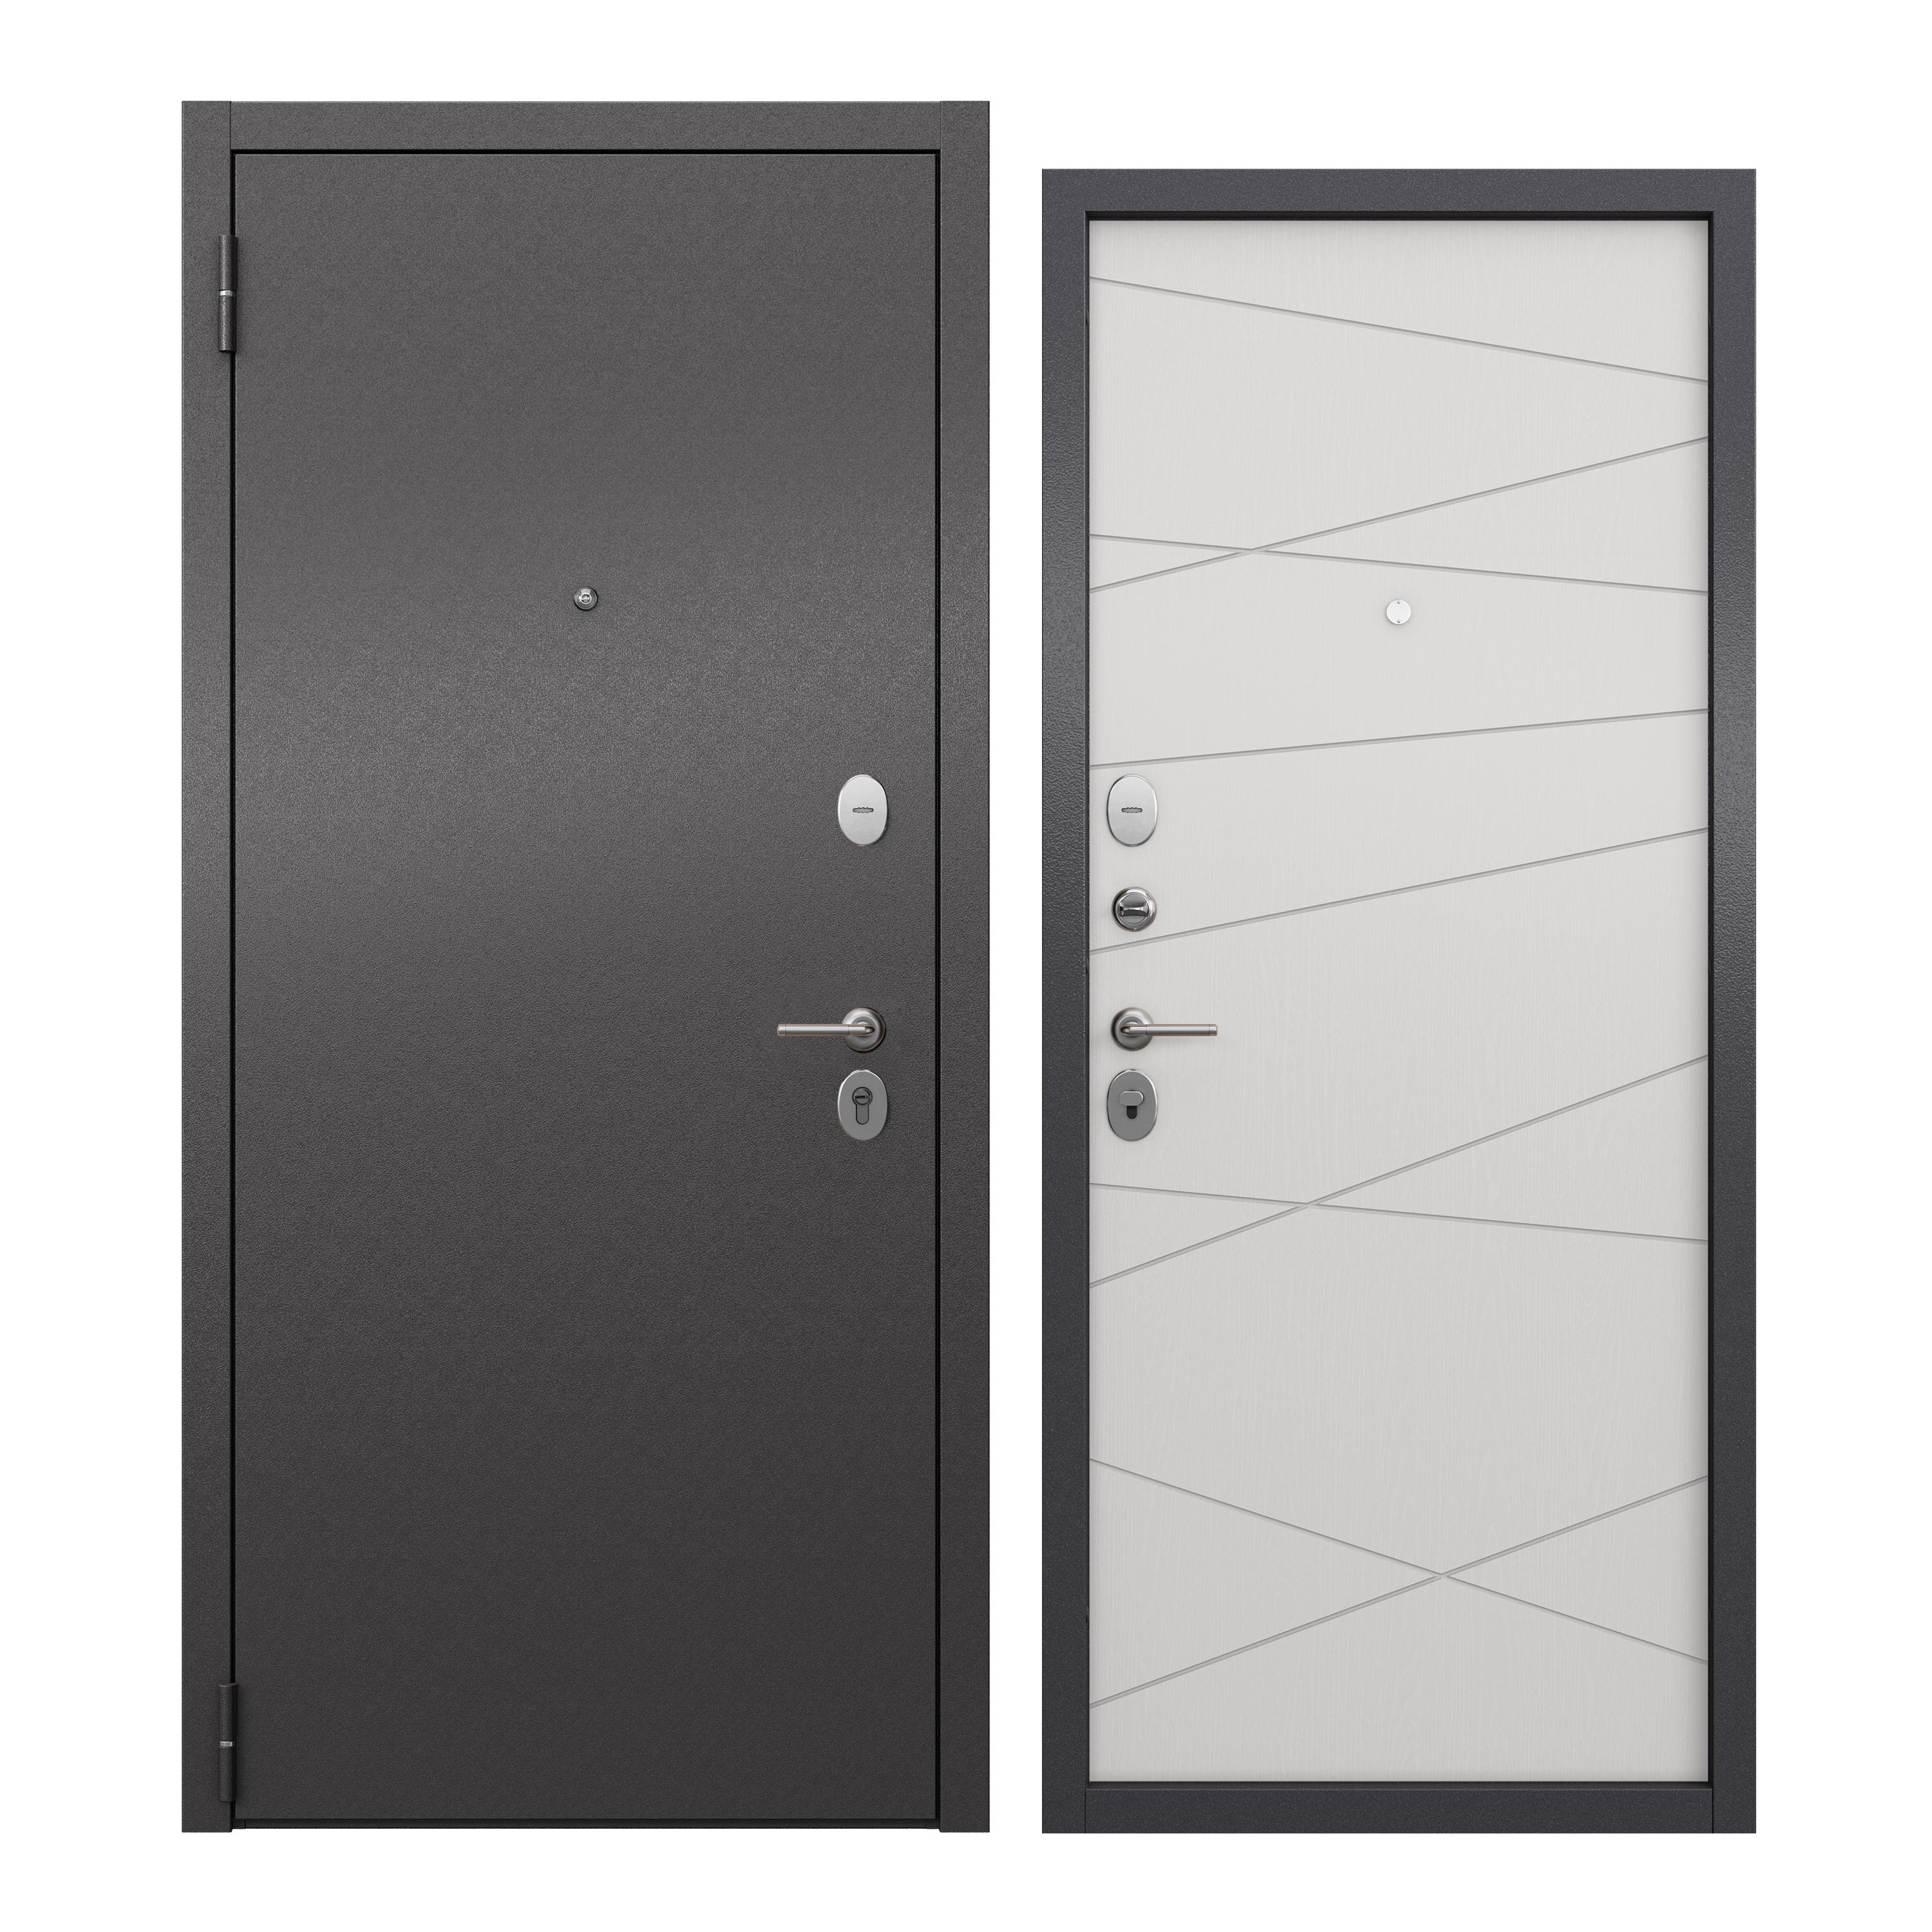 Дверь входная для квартиры ProLine металлическая Apartment X 860х2050, левая, серый/белый дверь входная buldoors вилд левая букле шоколад букле шоколад 860х2050 мм